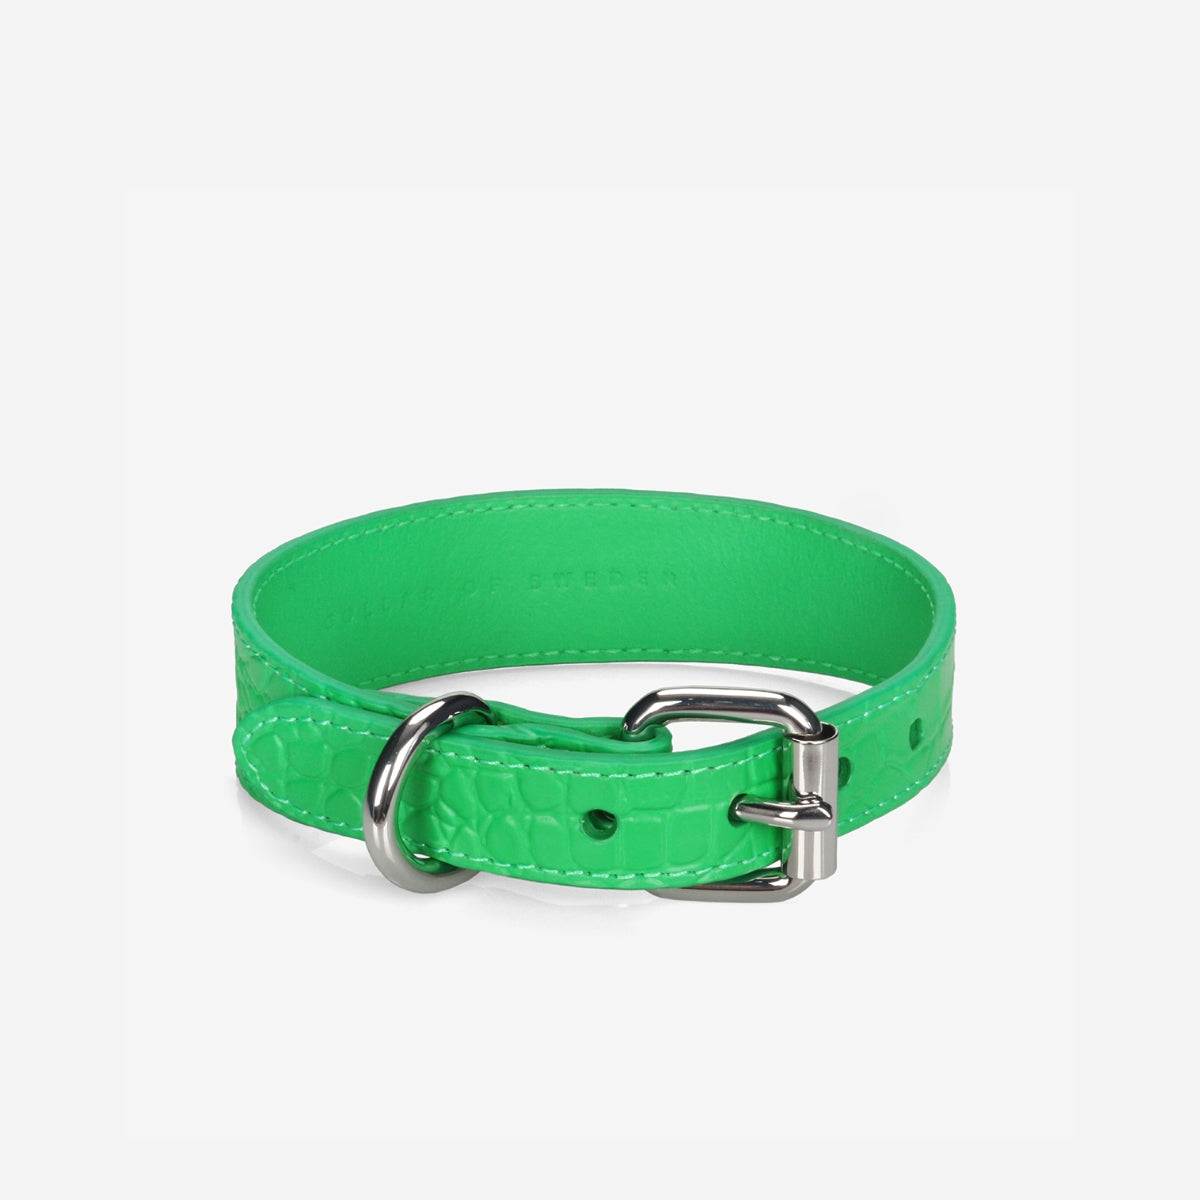 green-dog-collar-medium-thin-buckle.jpg